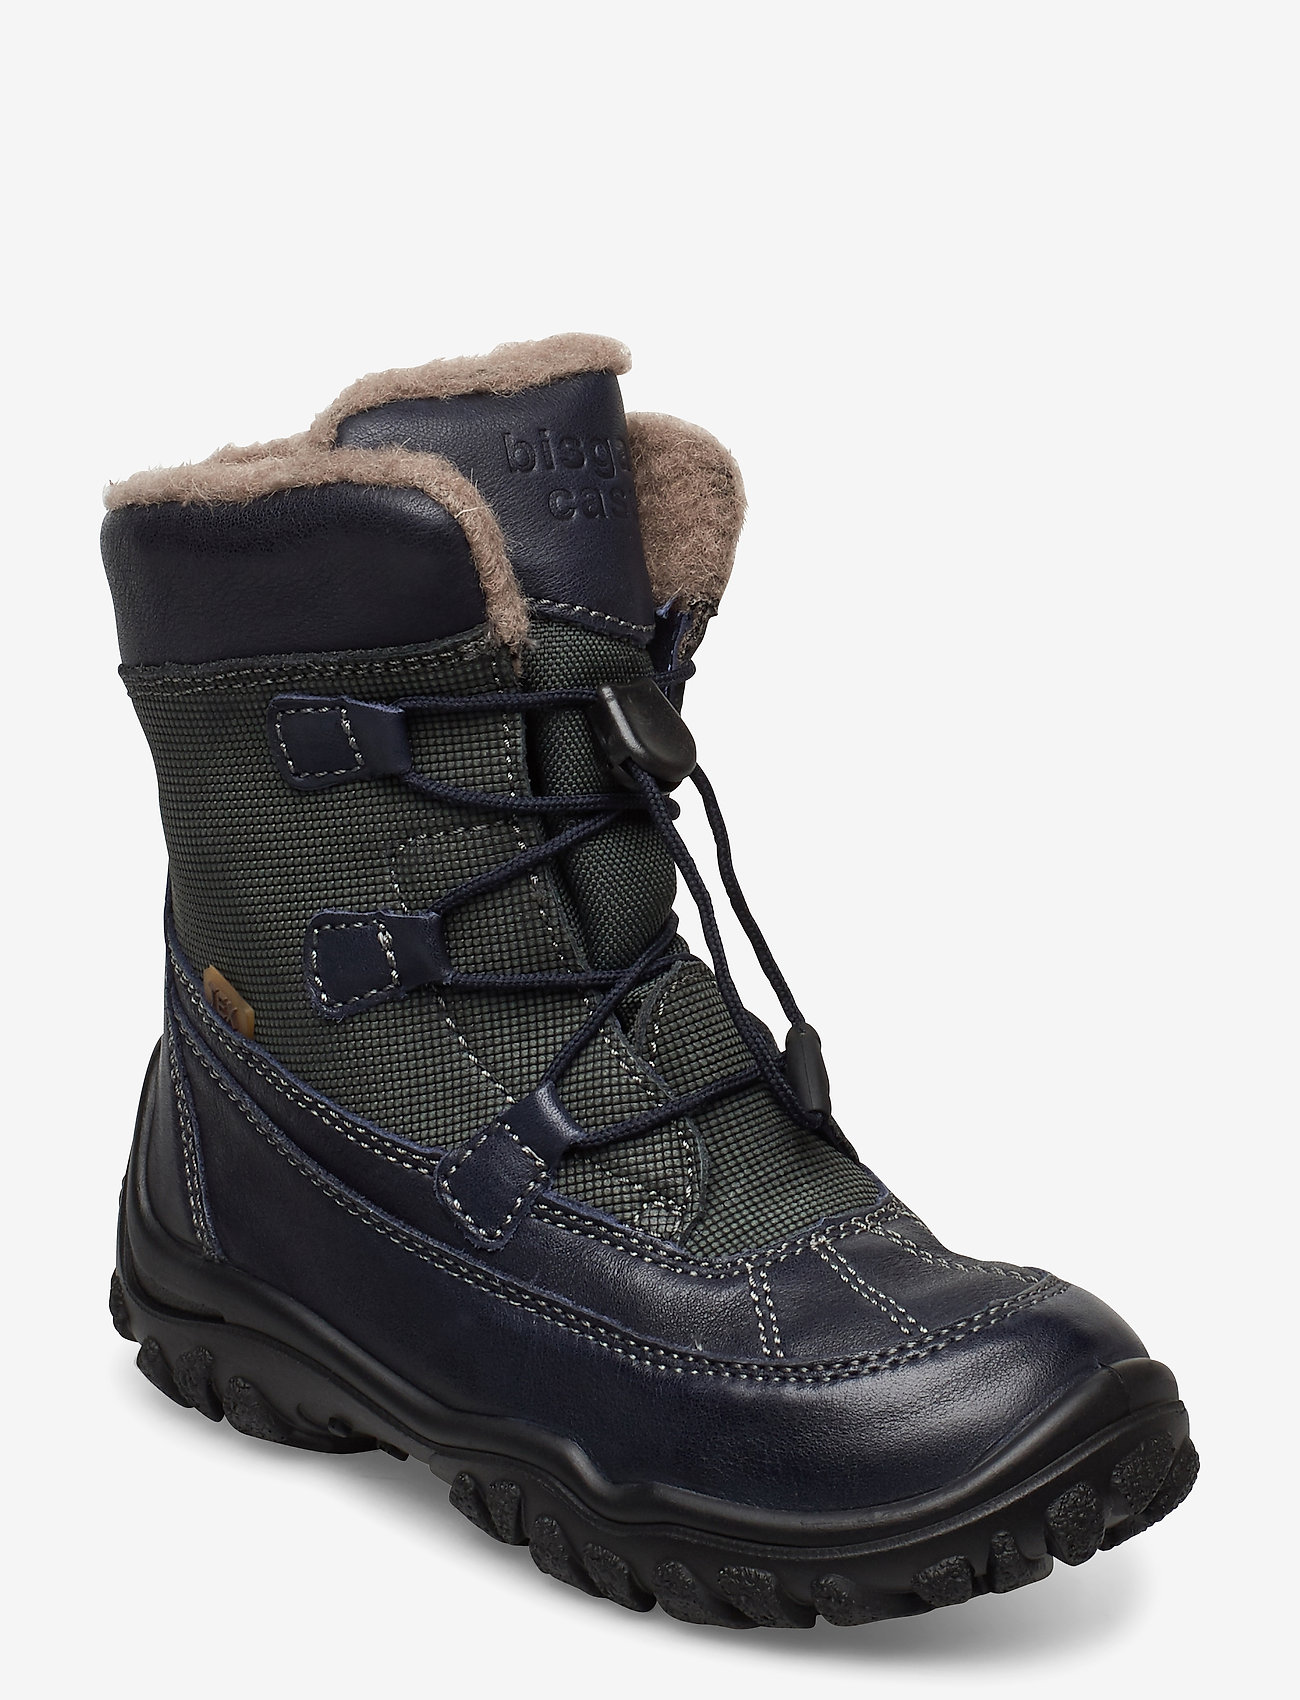 bisgaard winter boots